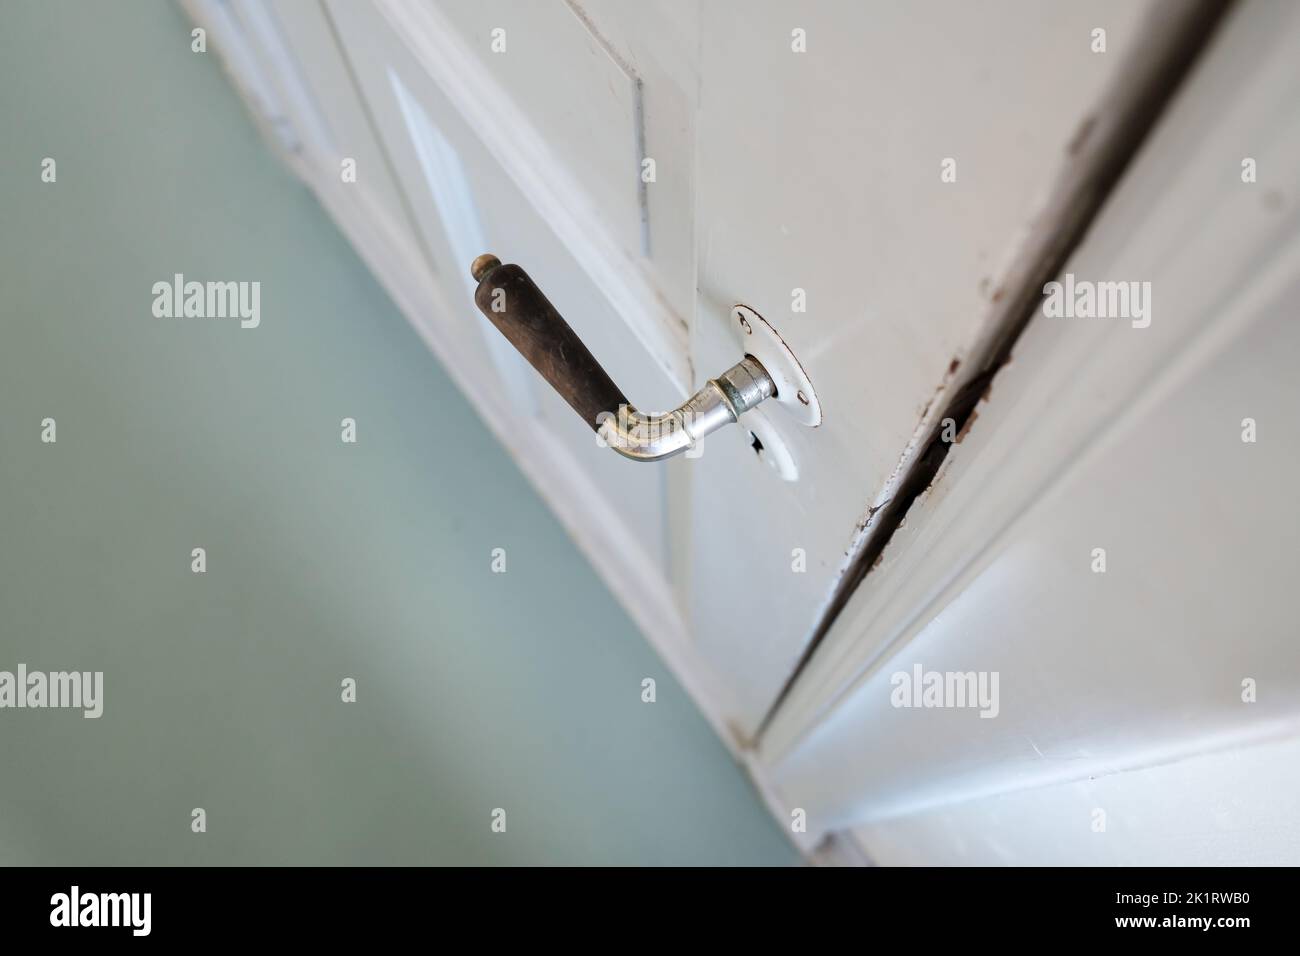 Old doorknob on a white wooden door, indoors. Close-up. Top view. Stock Photo